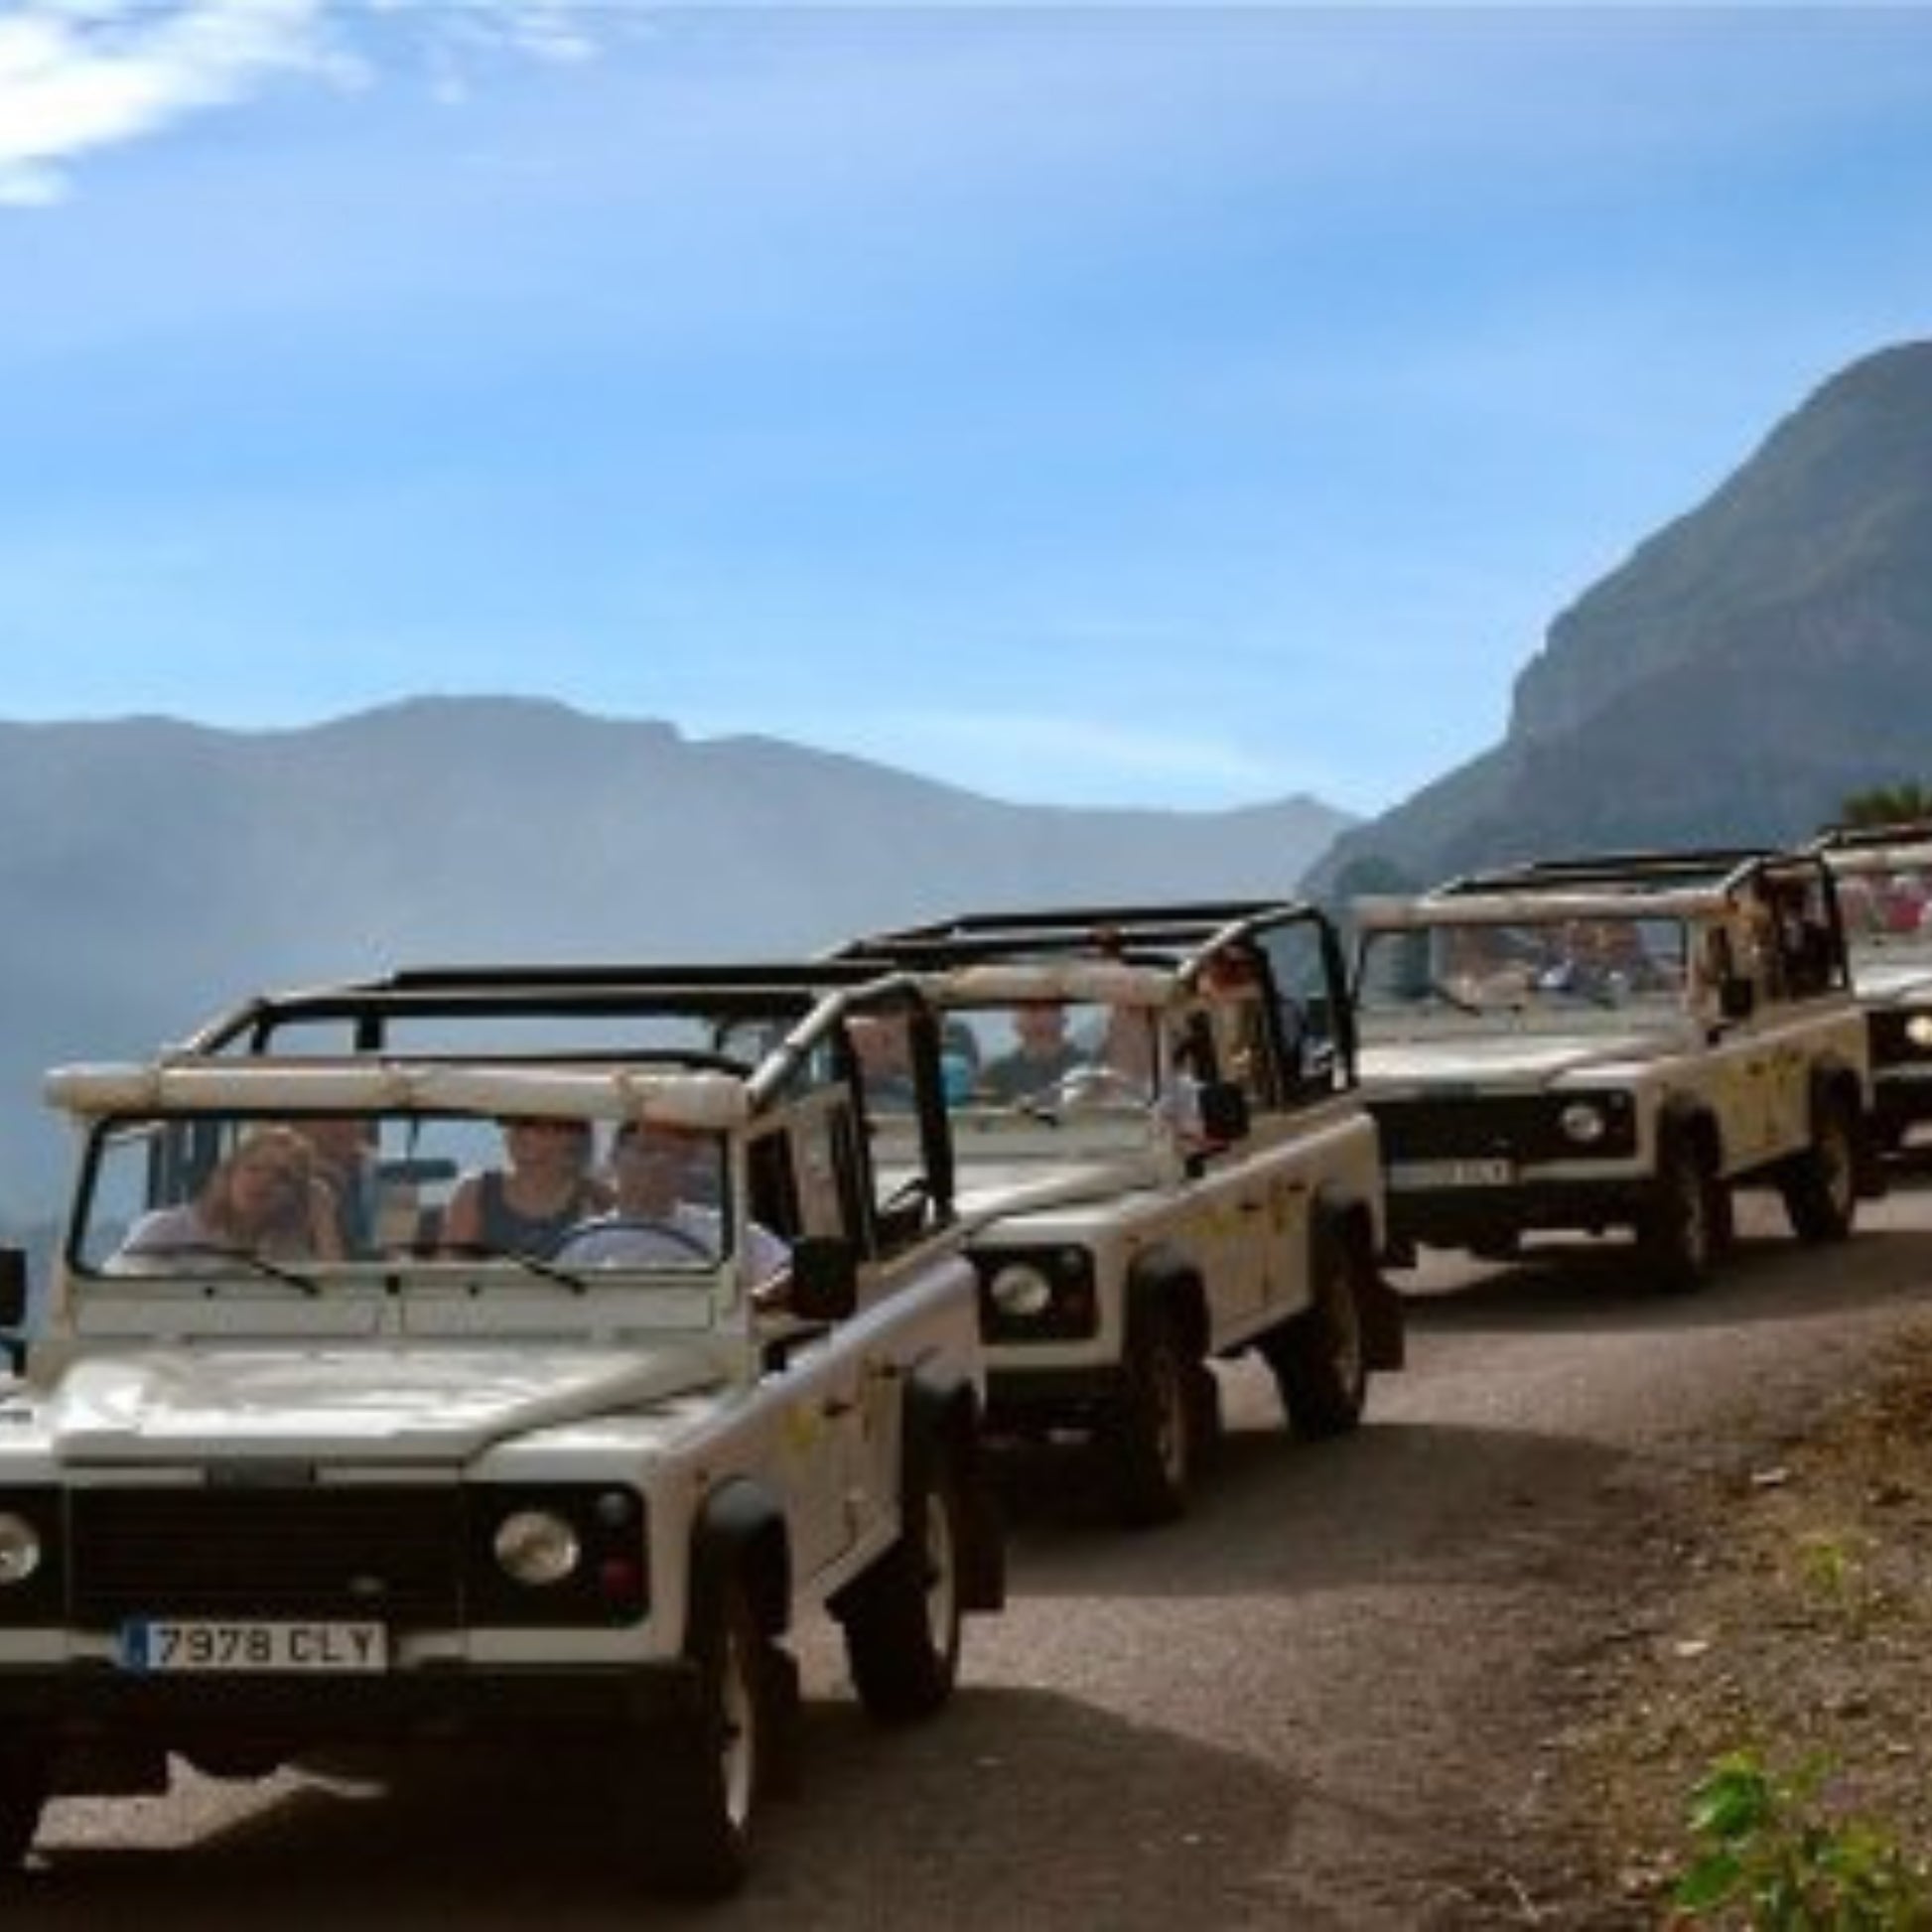 jeep safari gran canaria